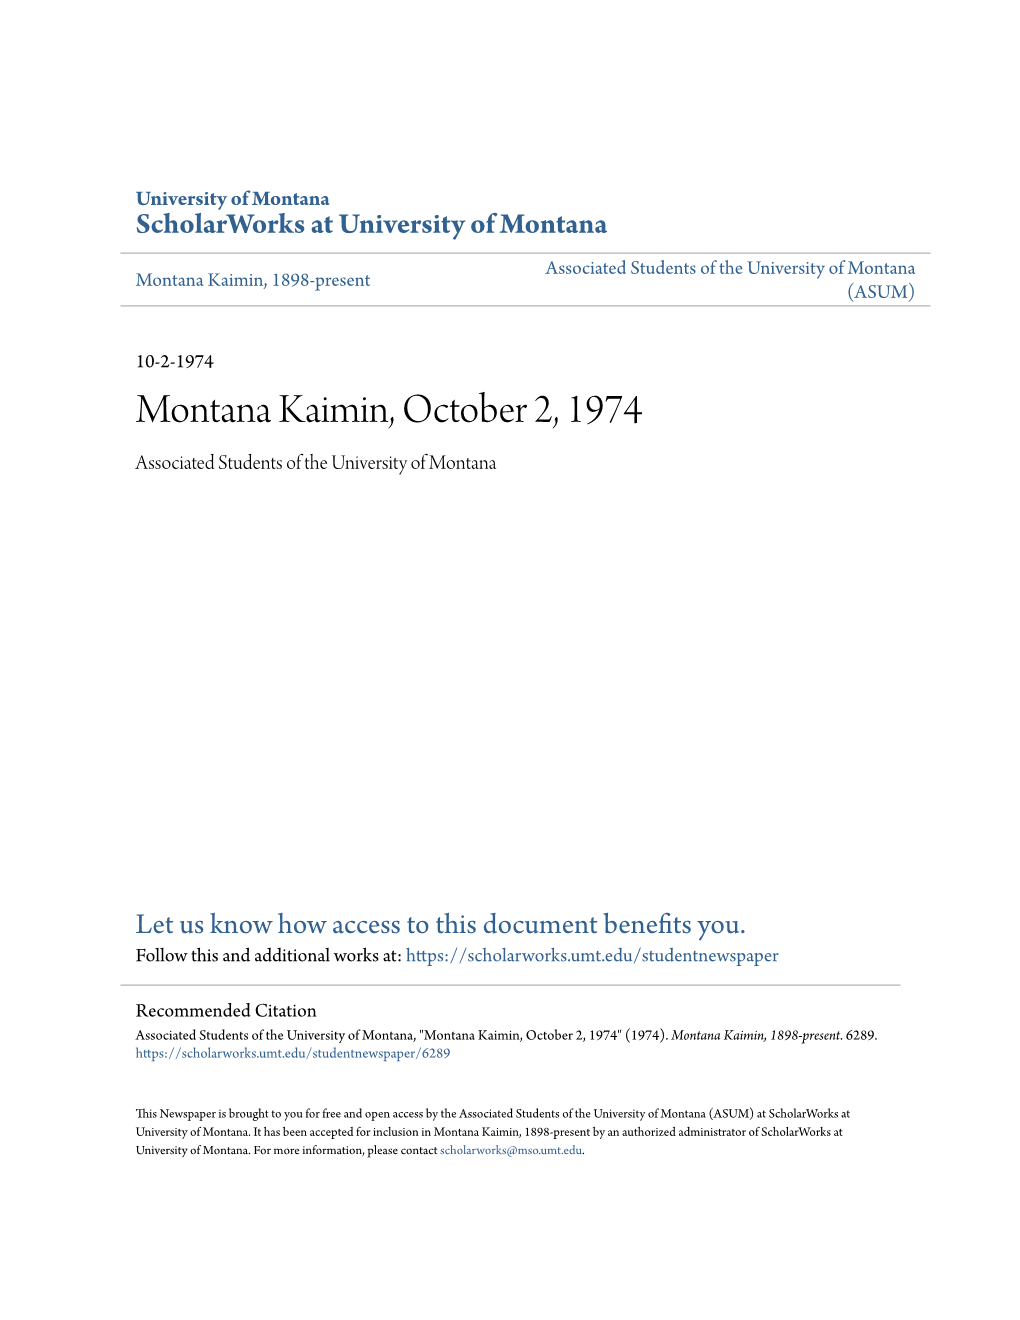 Montana Kaimin, October 2, 1974 Associated Students of the University of Montana